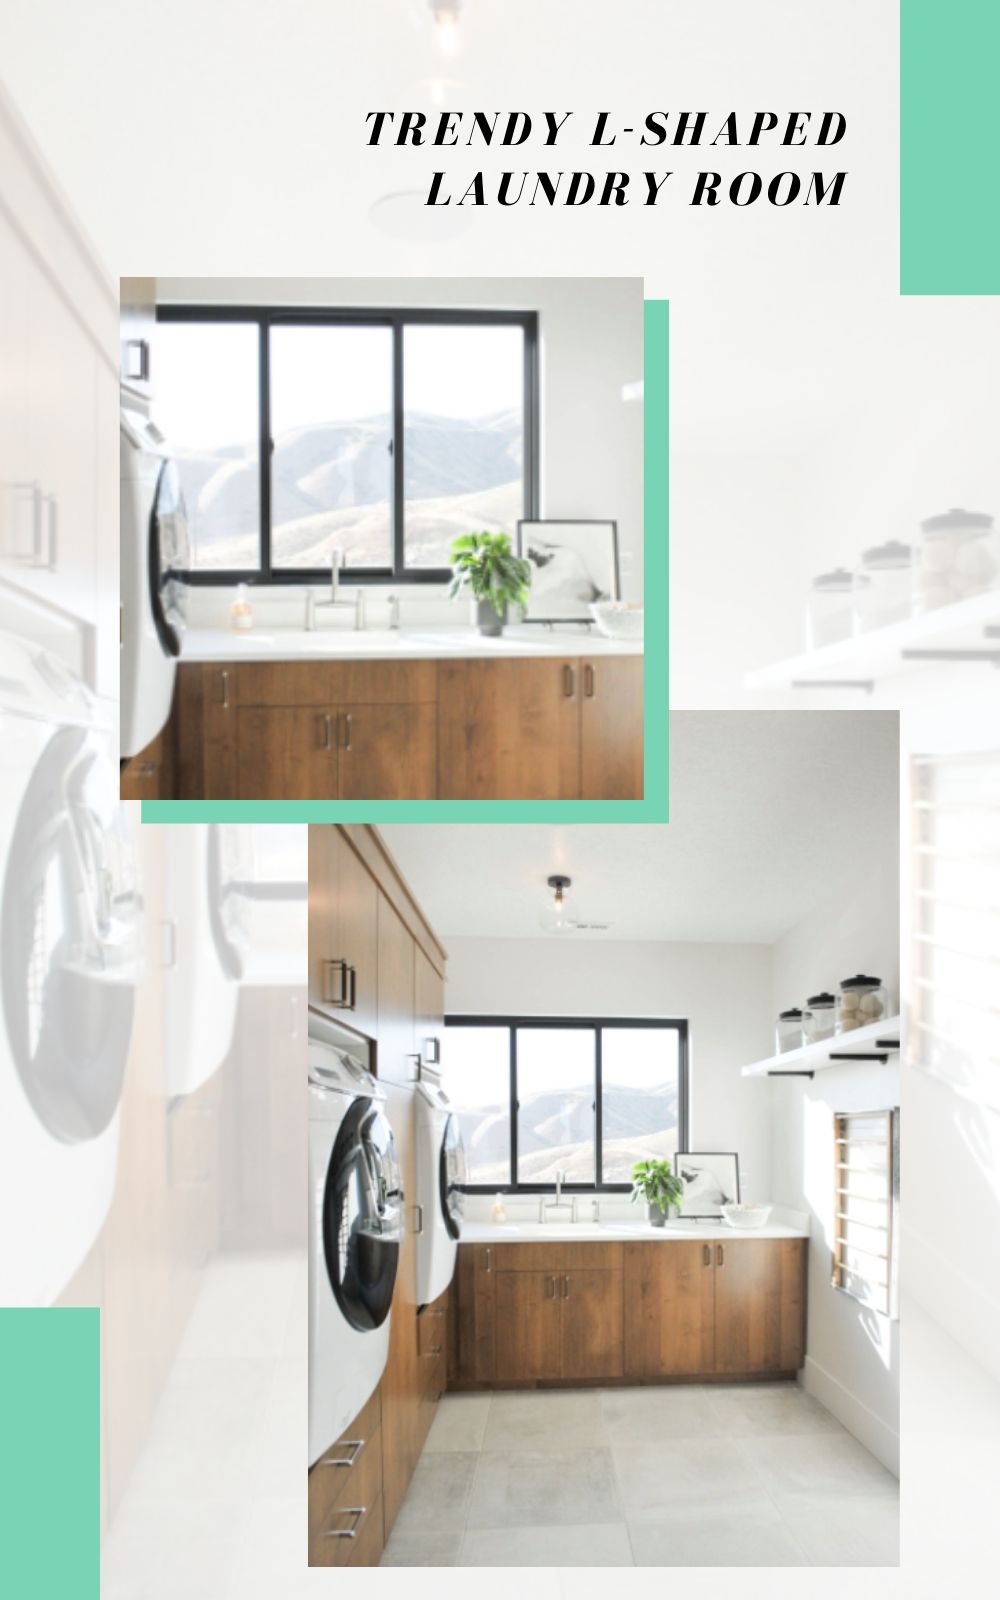 backsplash tile ideas above laundry room sink